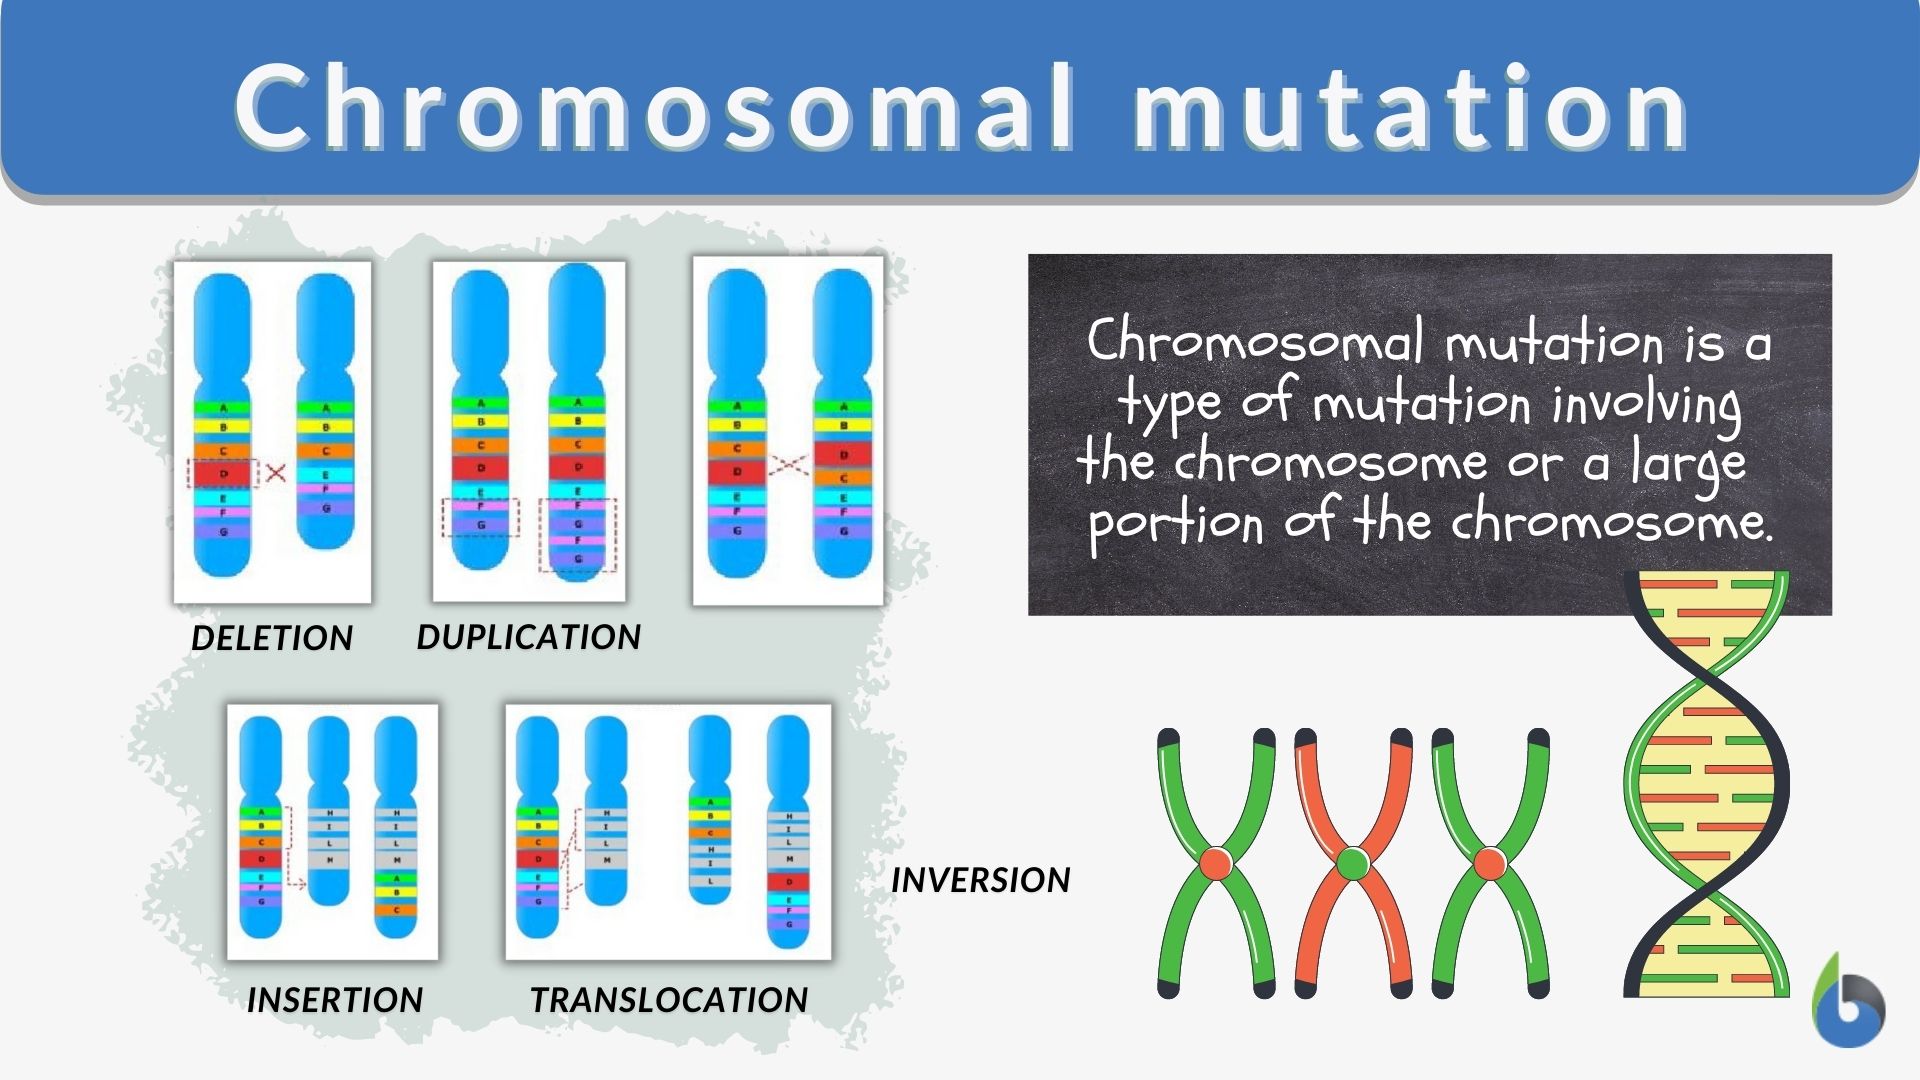 chromosome deletion